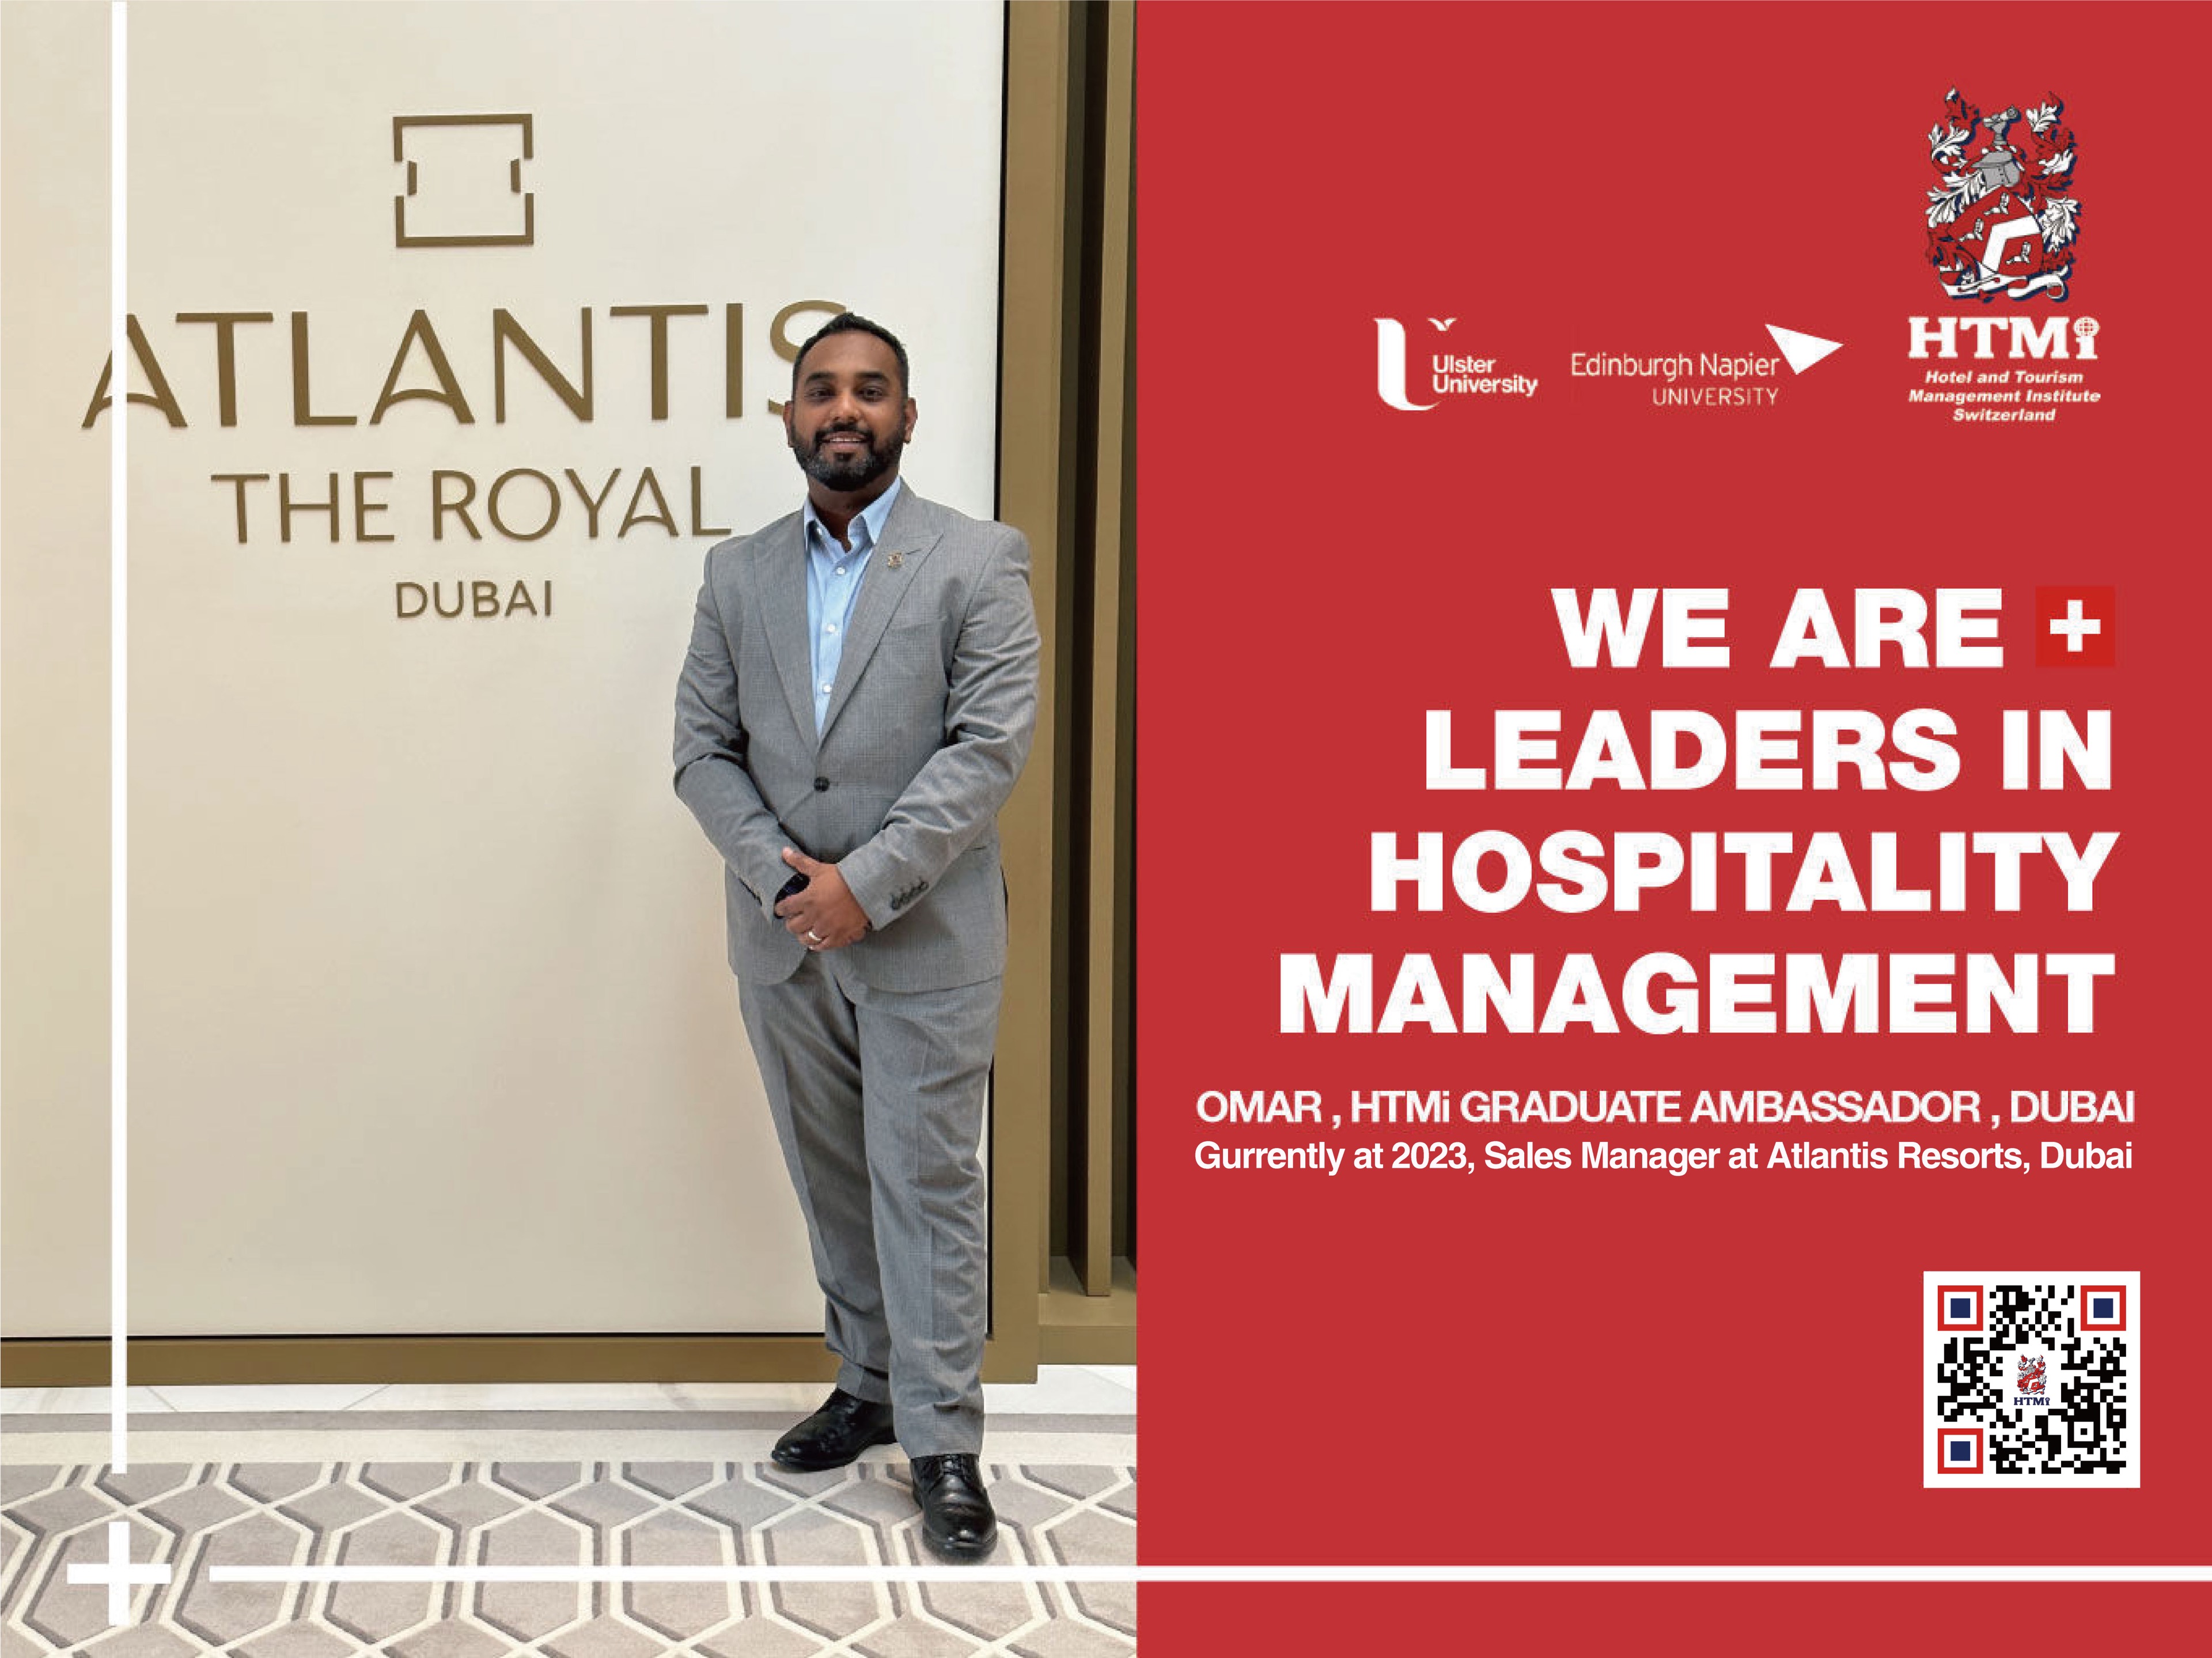 Omar Hammad Ali - Sales Manager at Atlantis Resort, Dubai HTMi Graduate Ambassador